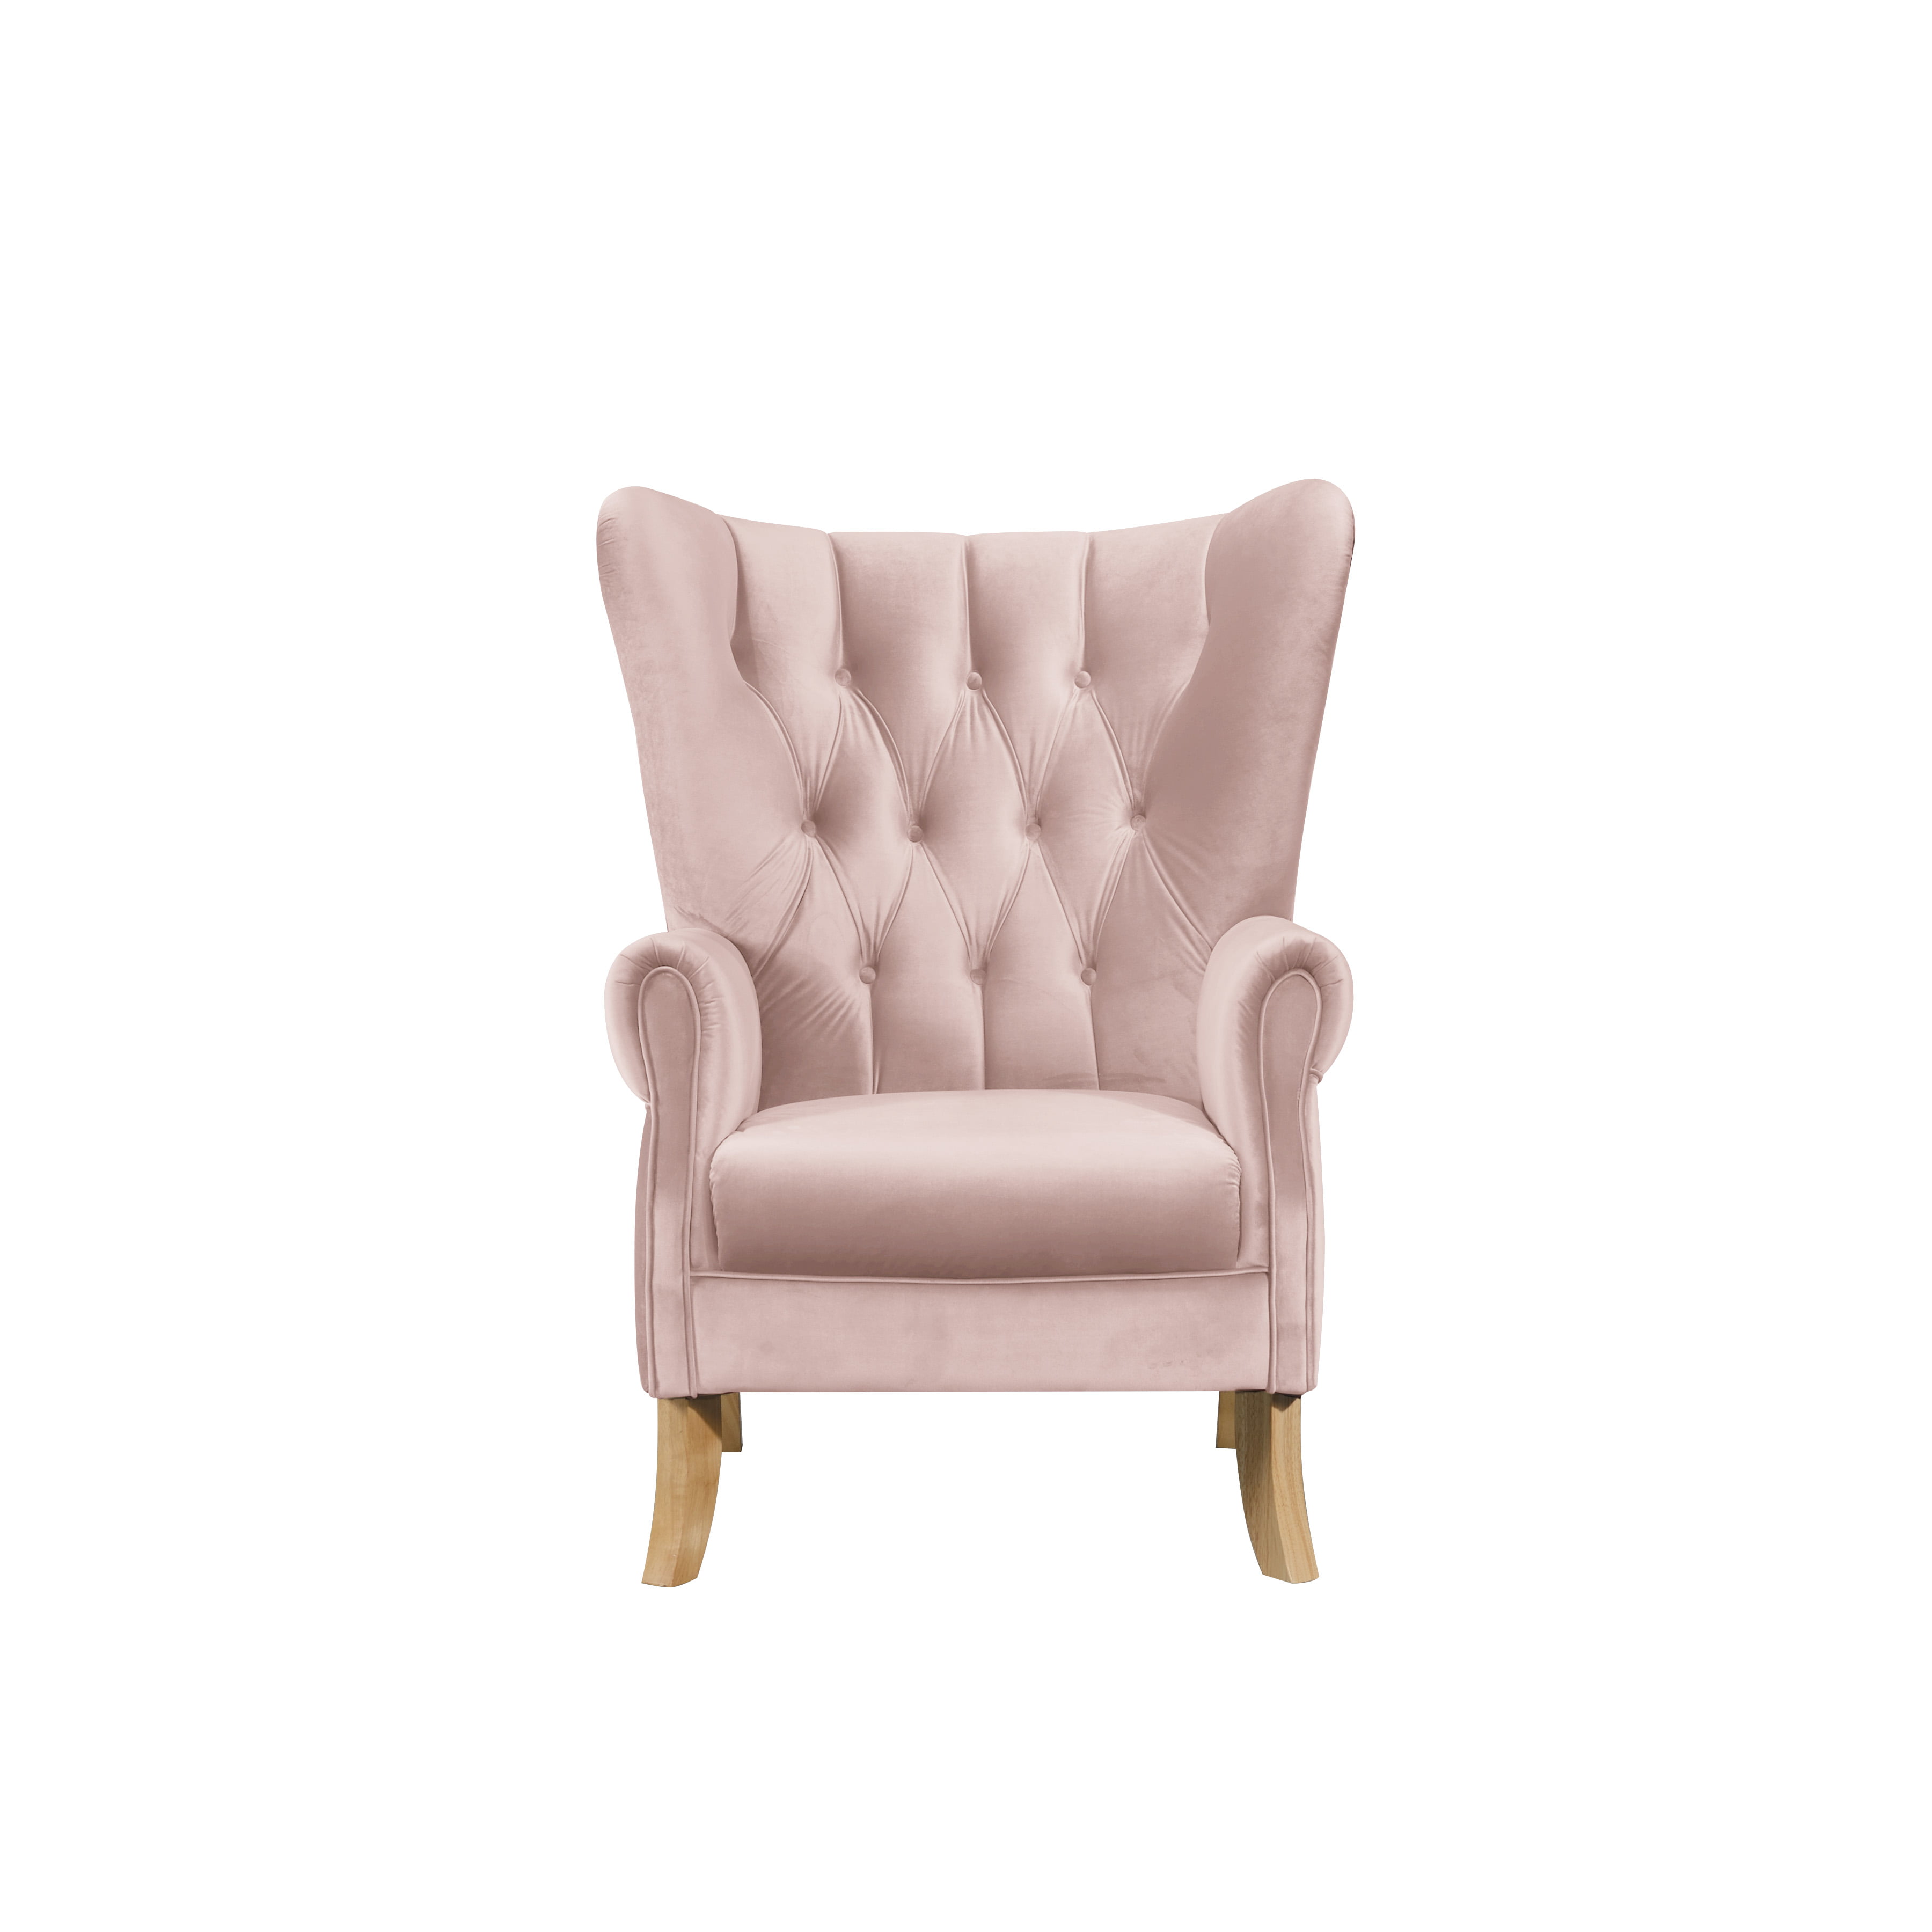 Adonis Accent Chair in Blush Pink Velvet